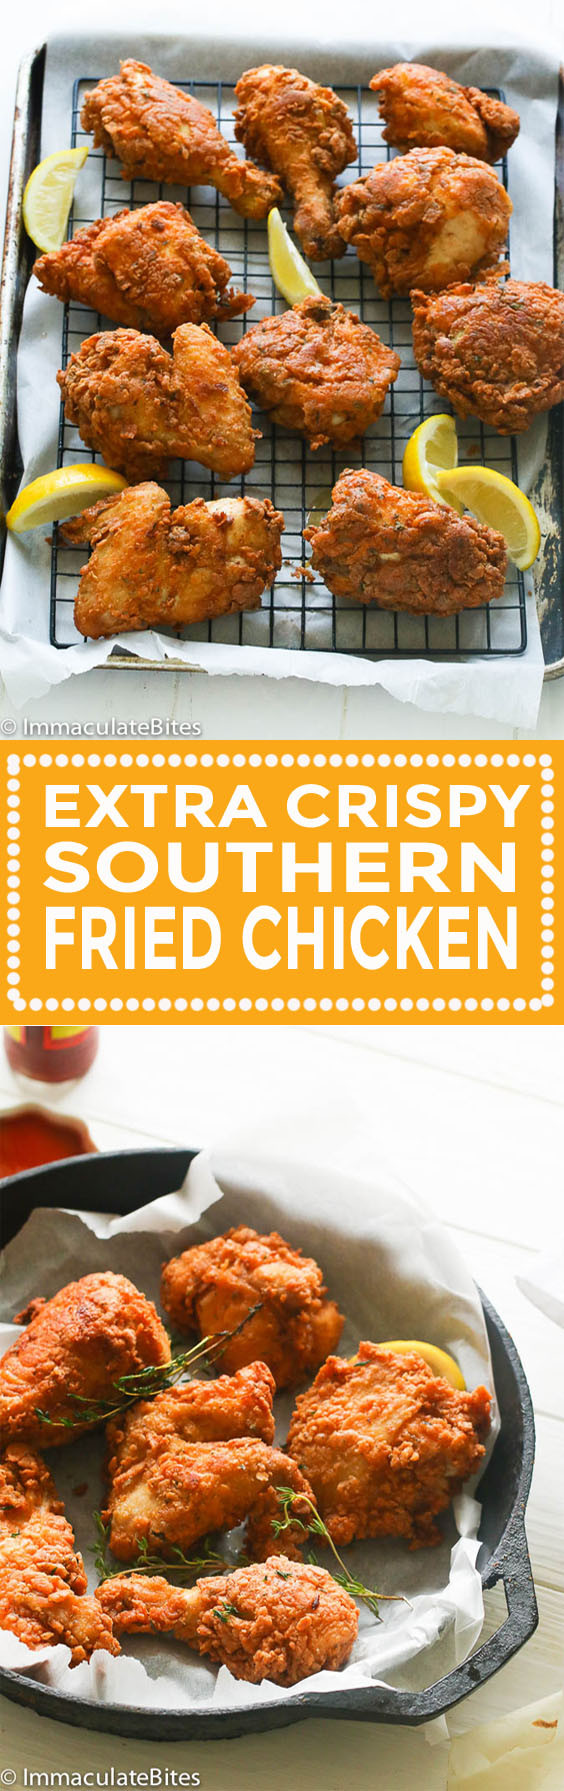 Southern Fried Chicken
 Southern Fried Chicken Immaculate Bites